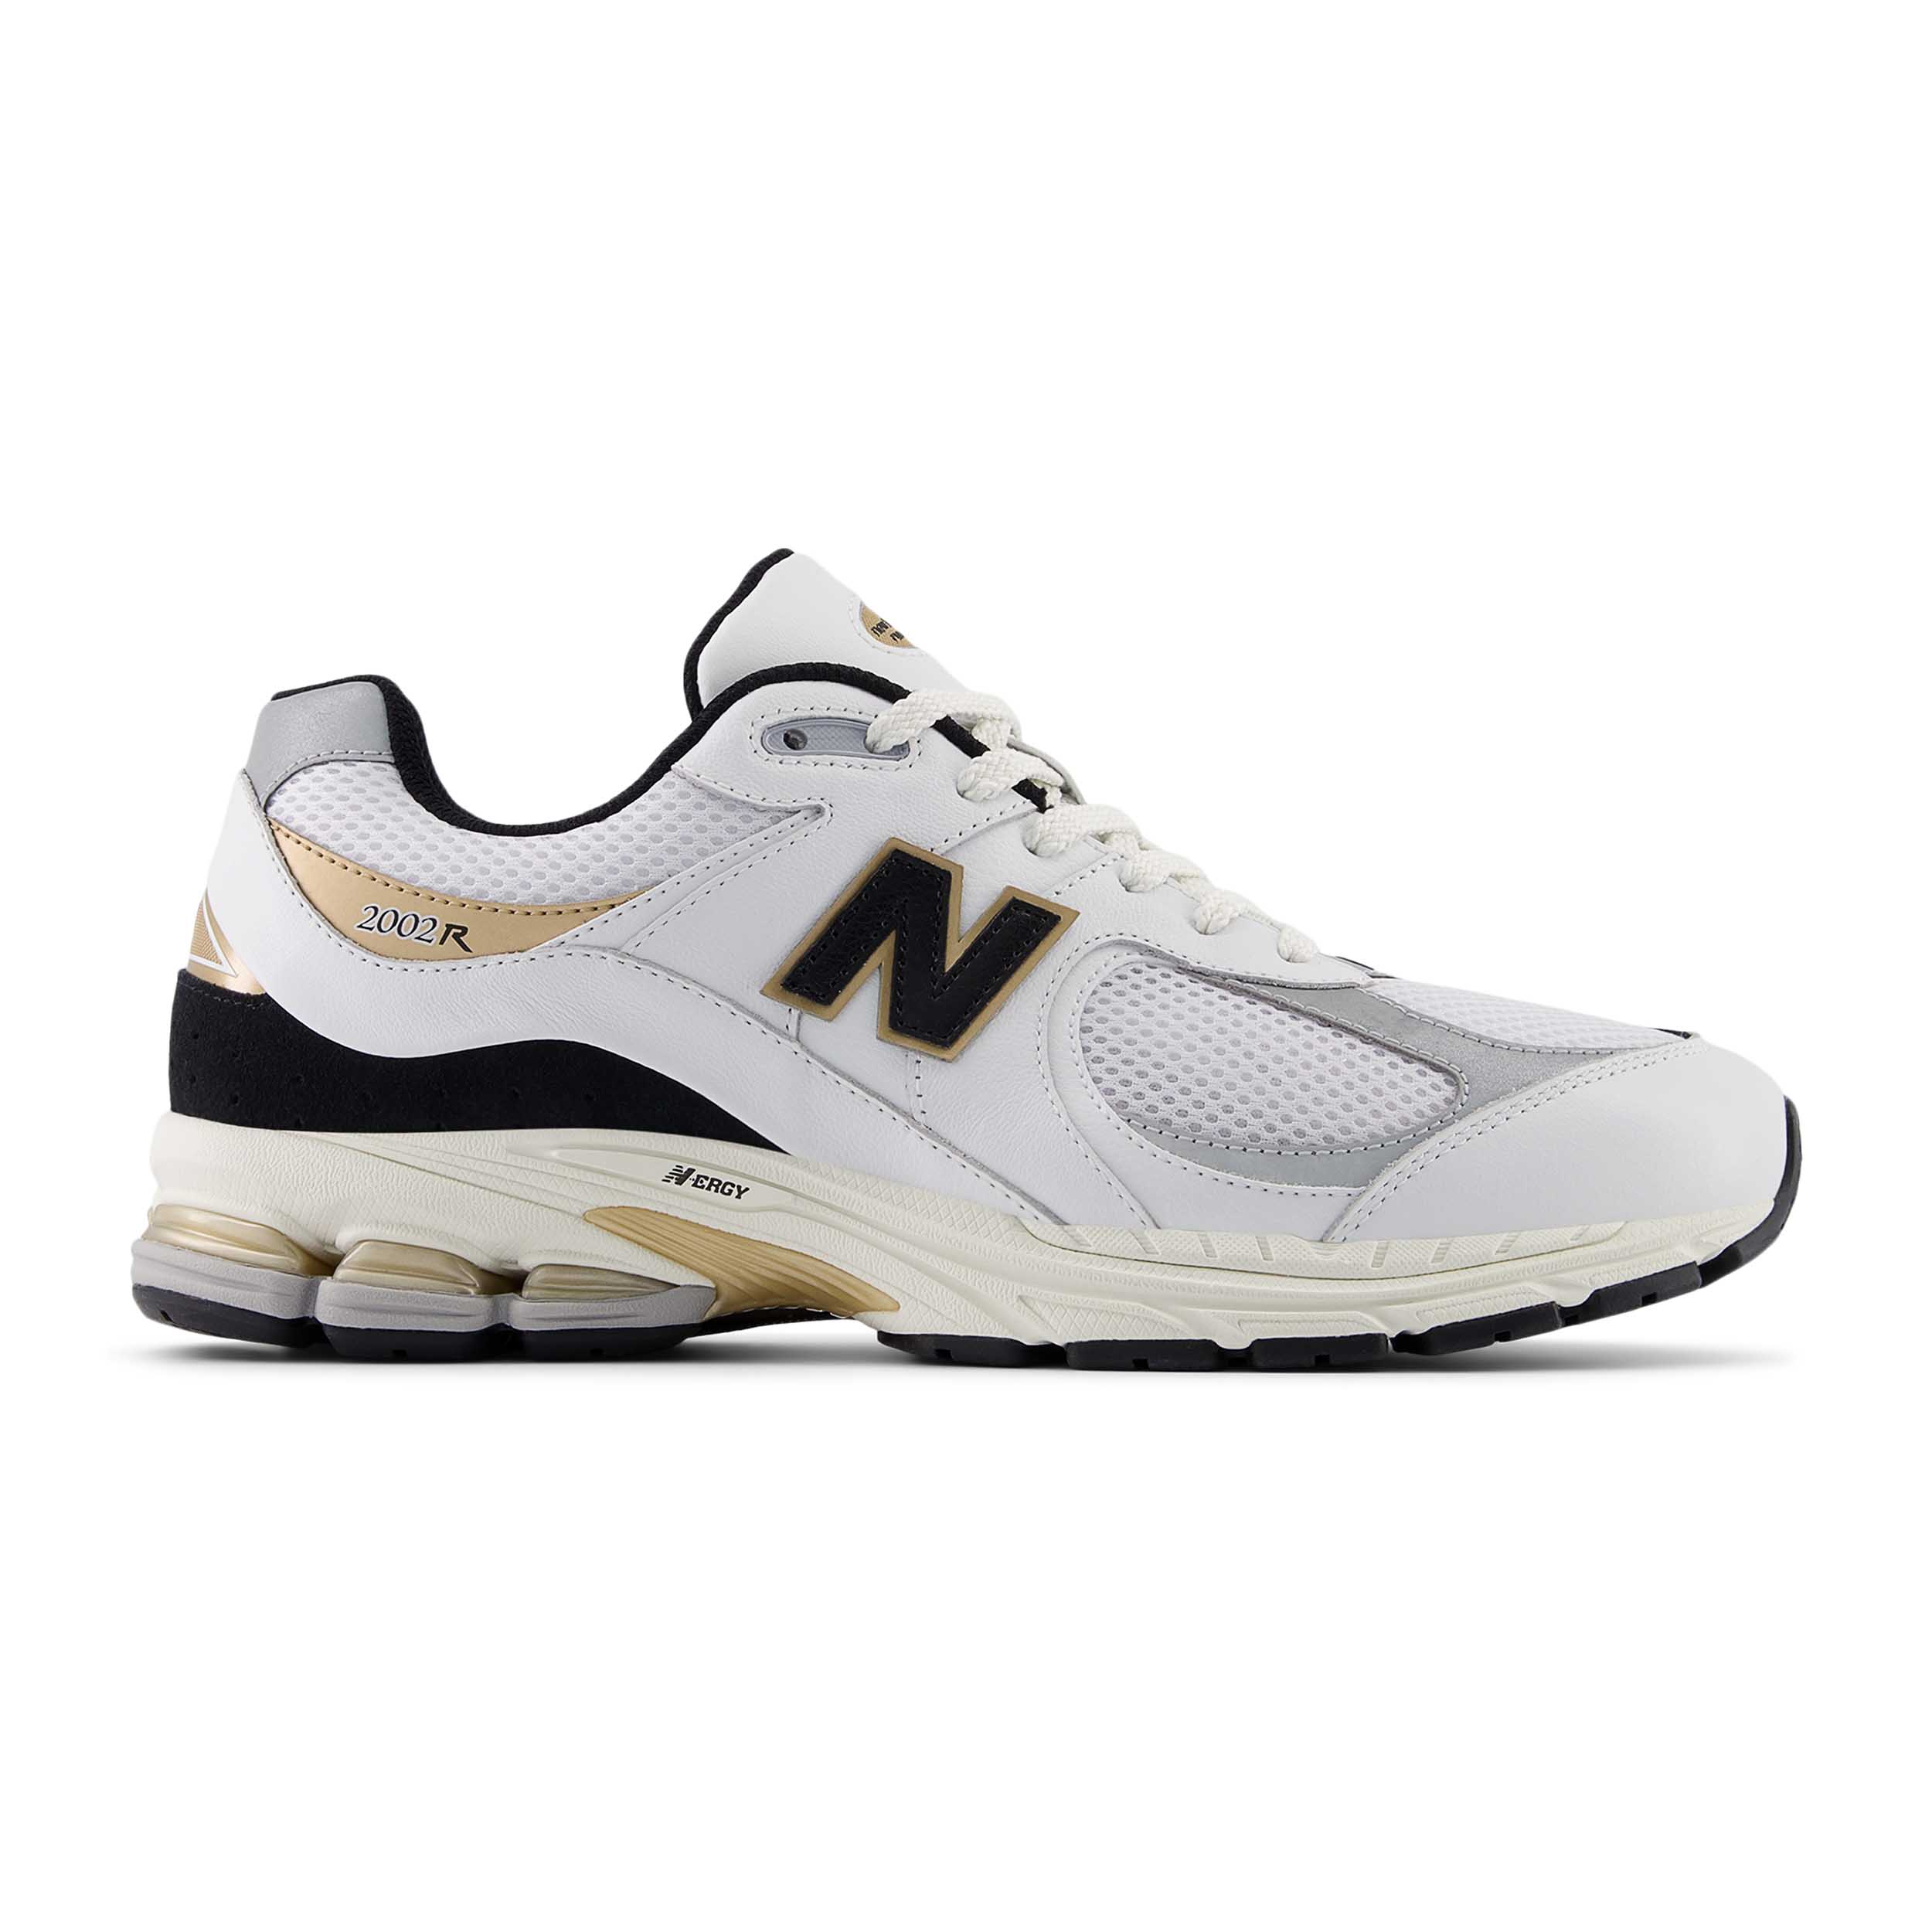 New Balance 2002 Sneaker White/Black